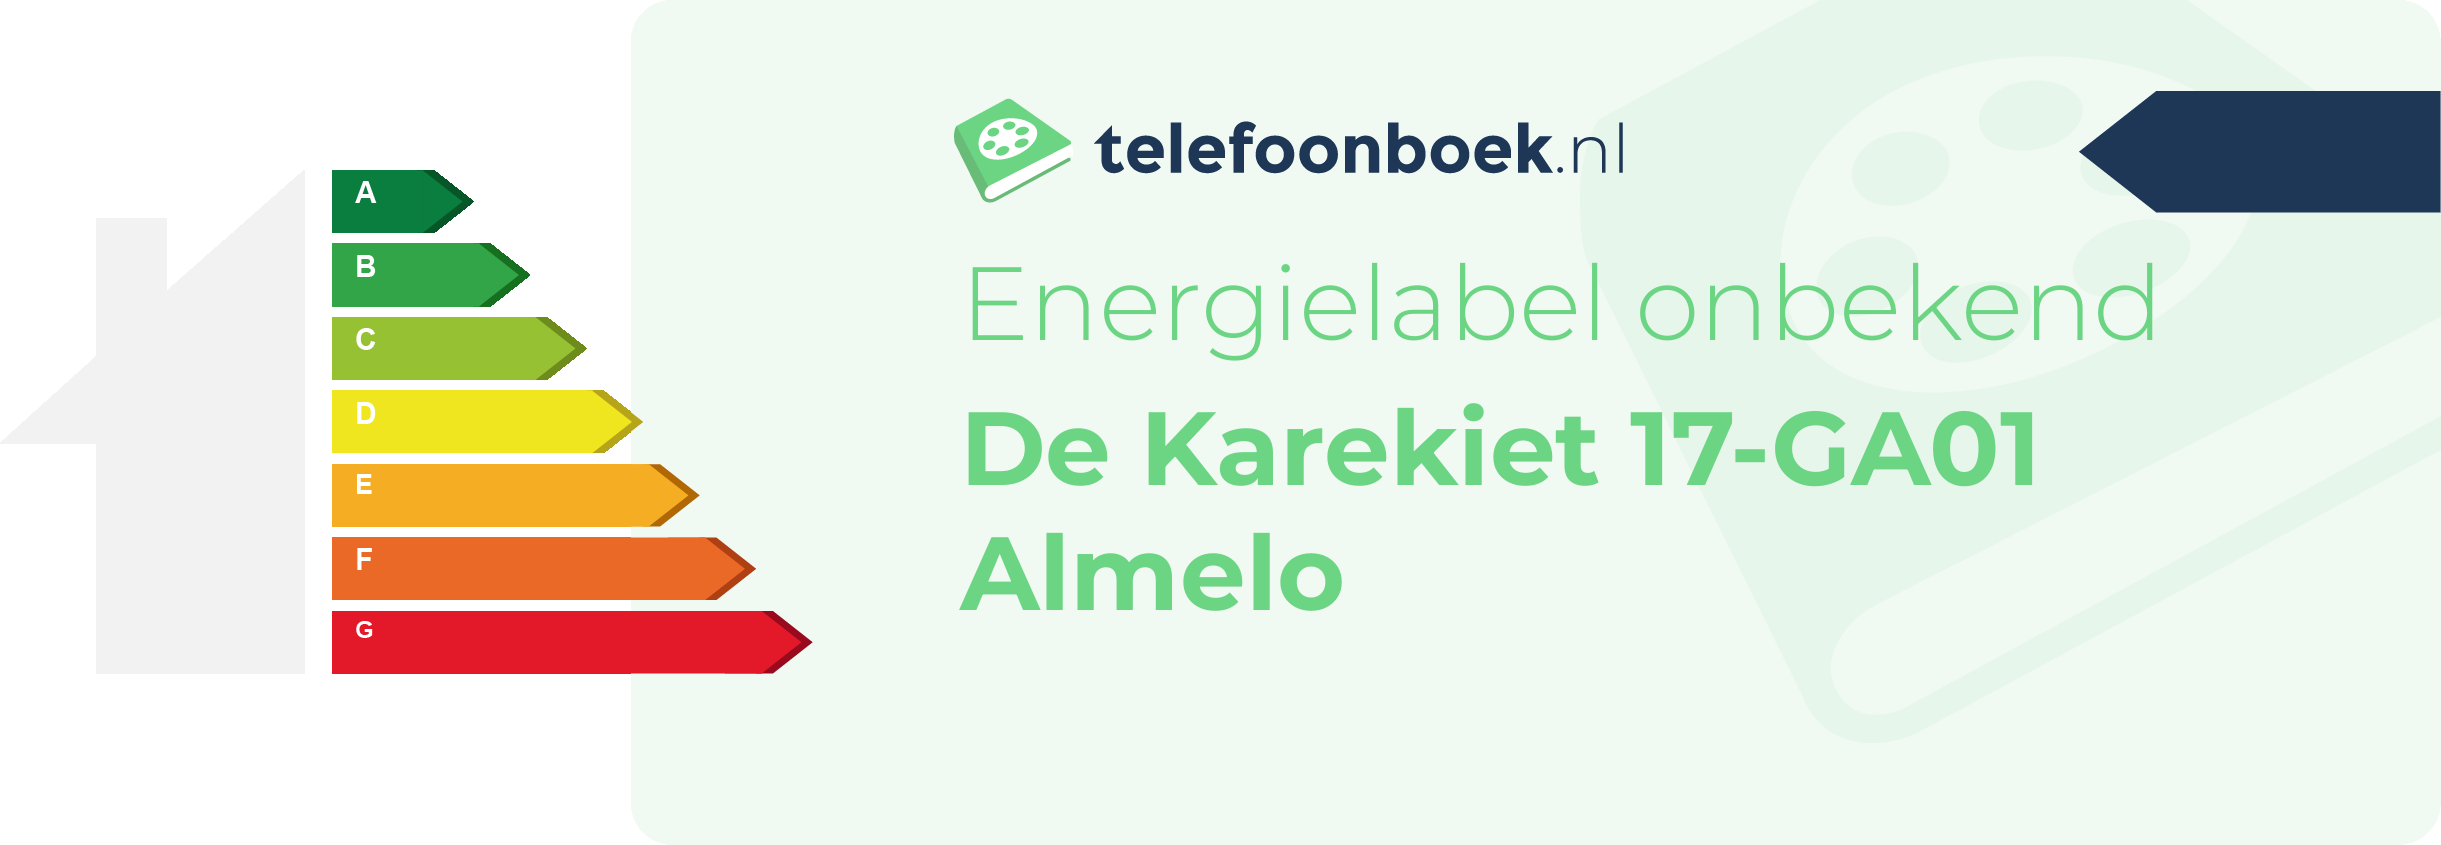 Energielabel De Karekiet 17-GA01 Almelo